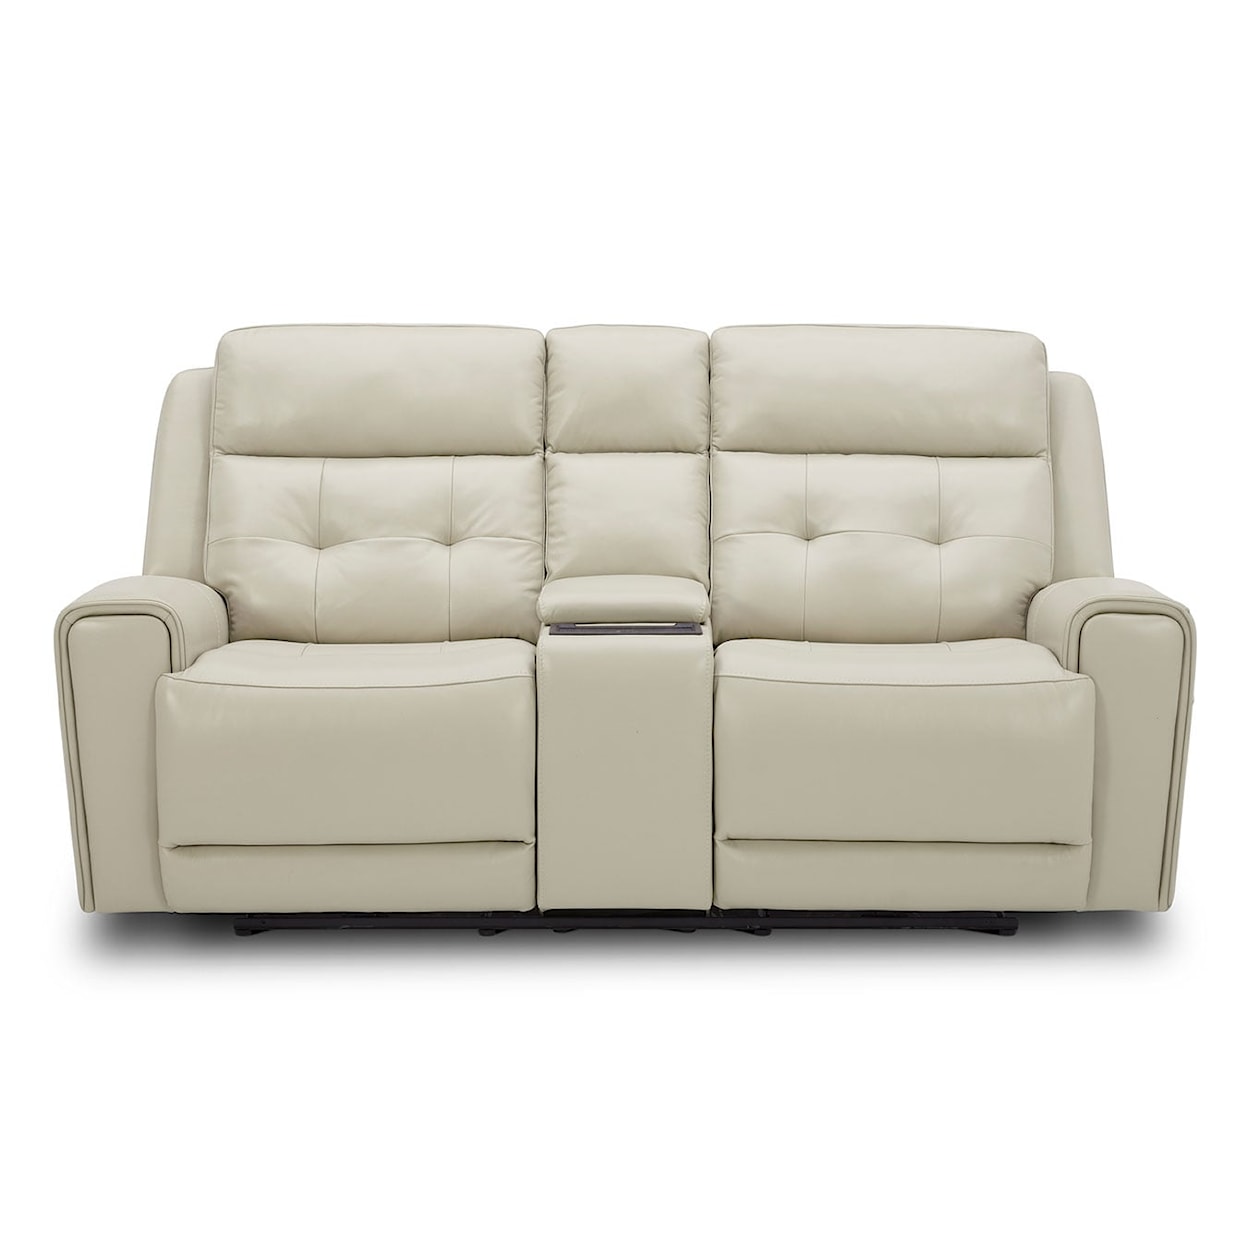 Liberty Furniture Carrington Sofa Set BAJA STONE PWR LOVESEAT